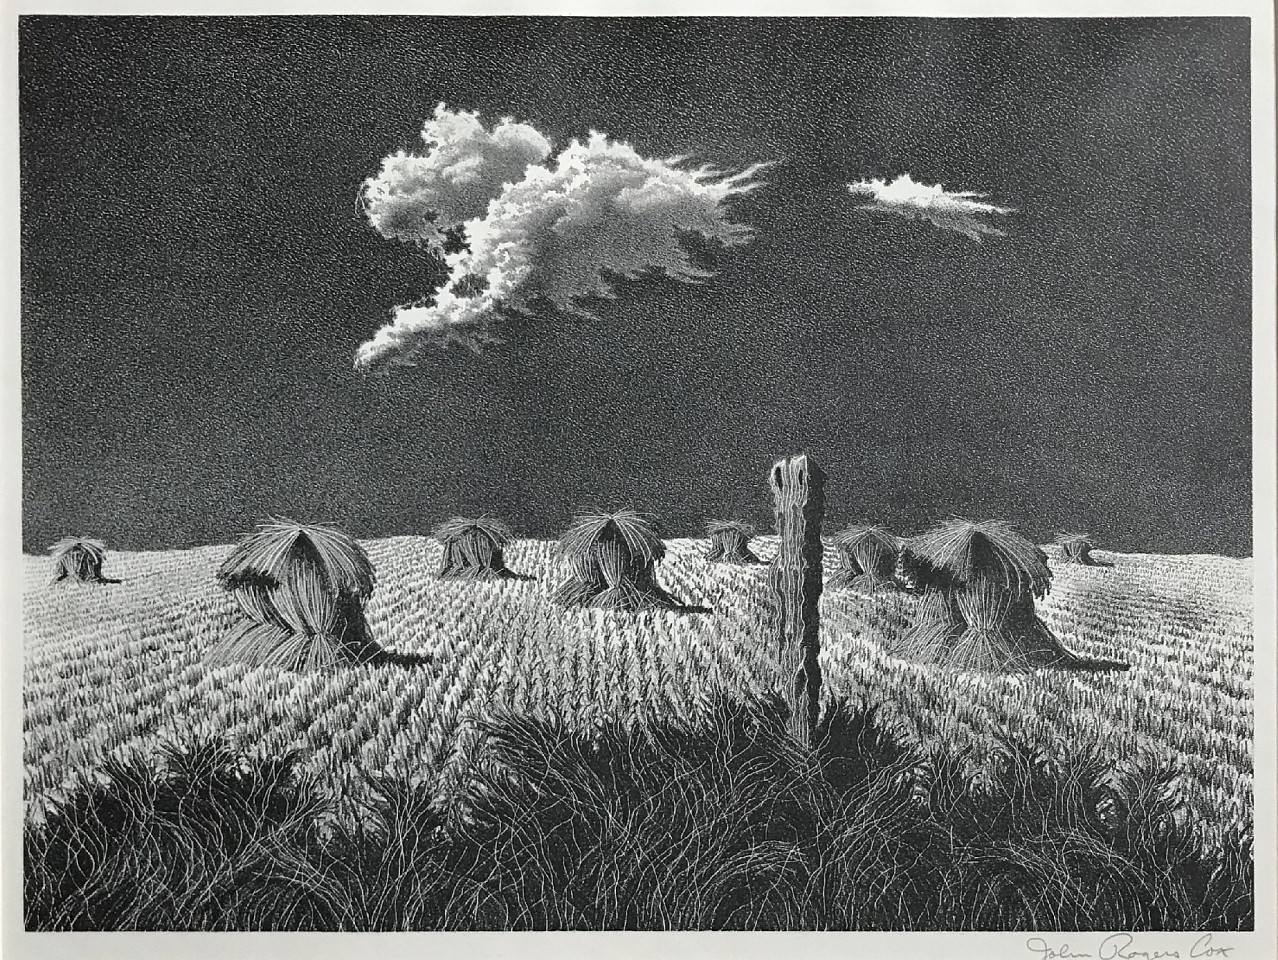 John Rogers Cox, Wheat Shocks
lithograph, 8 7/8"" x 11 7/8""  image size
signed
JCA 5741.26
$1,800